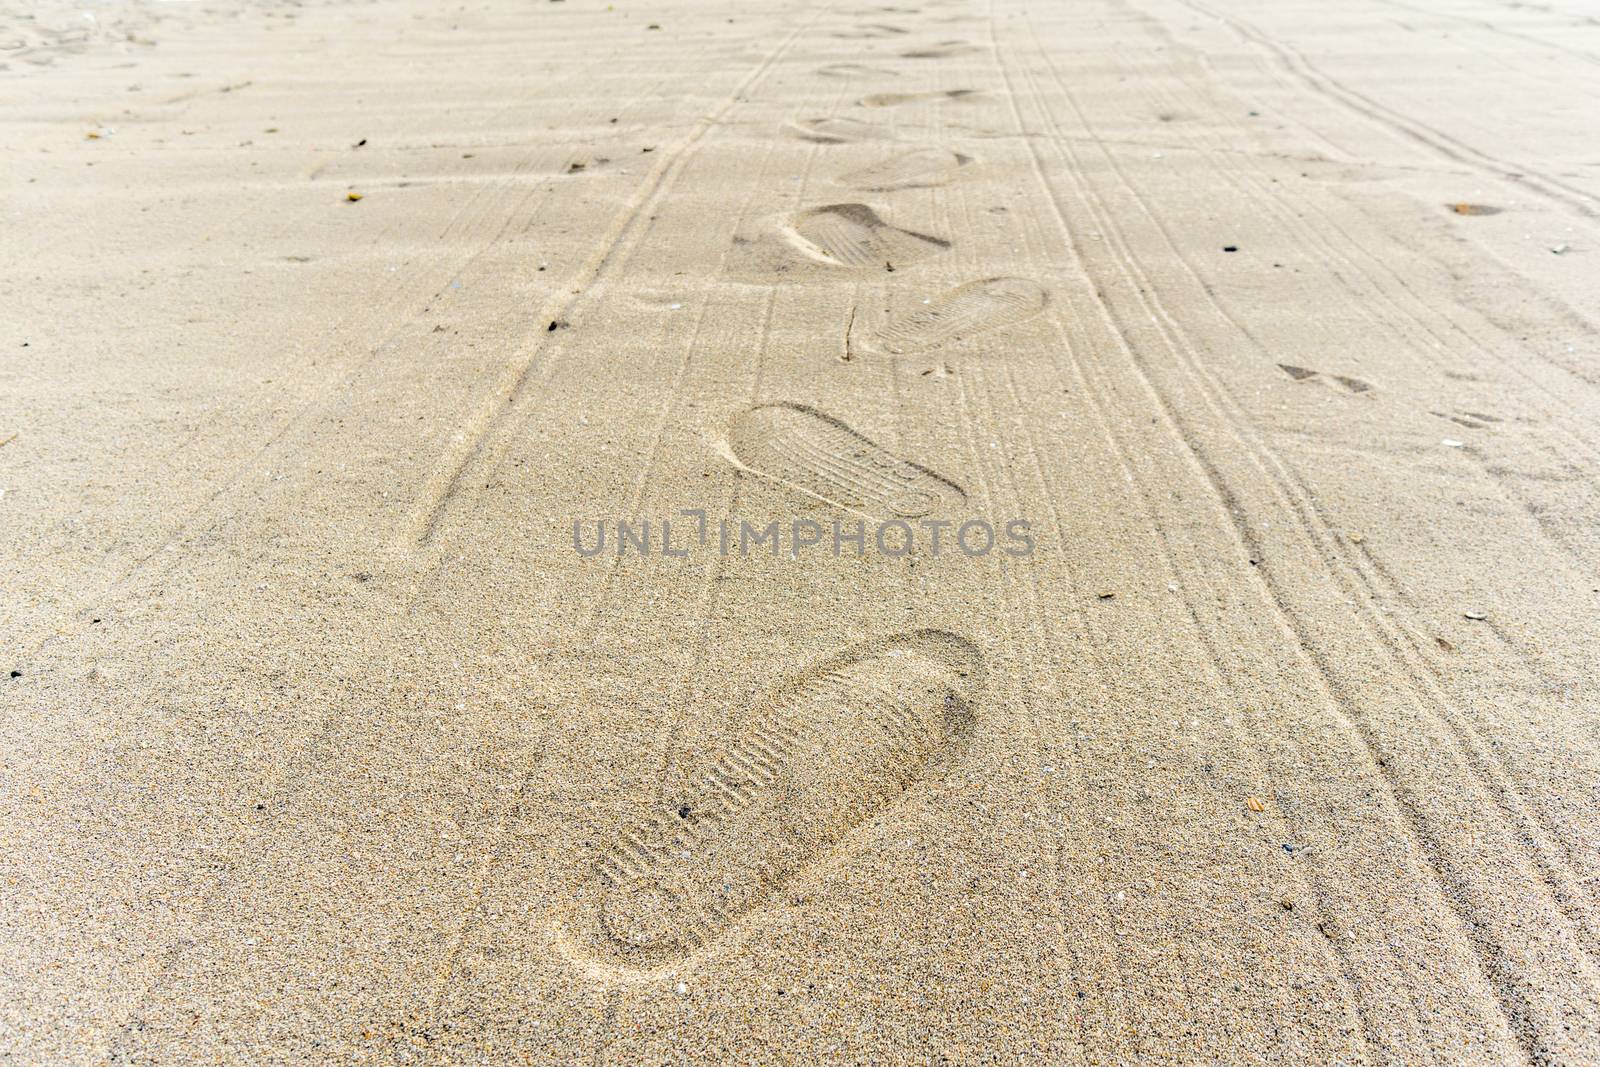 foot prints in the sand by sohel.parvez@hotmail.com